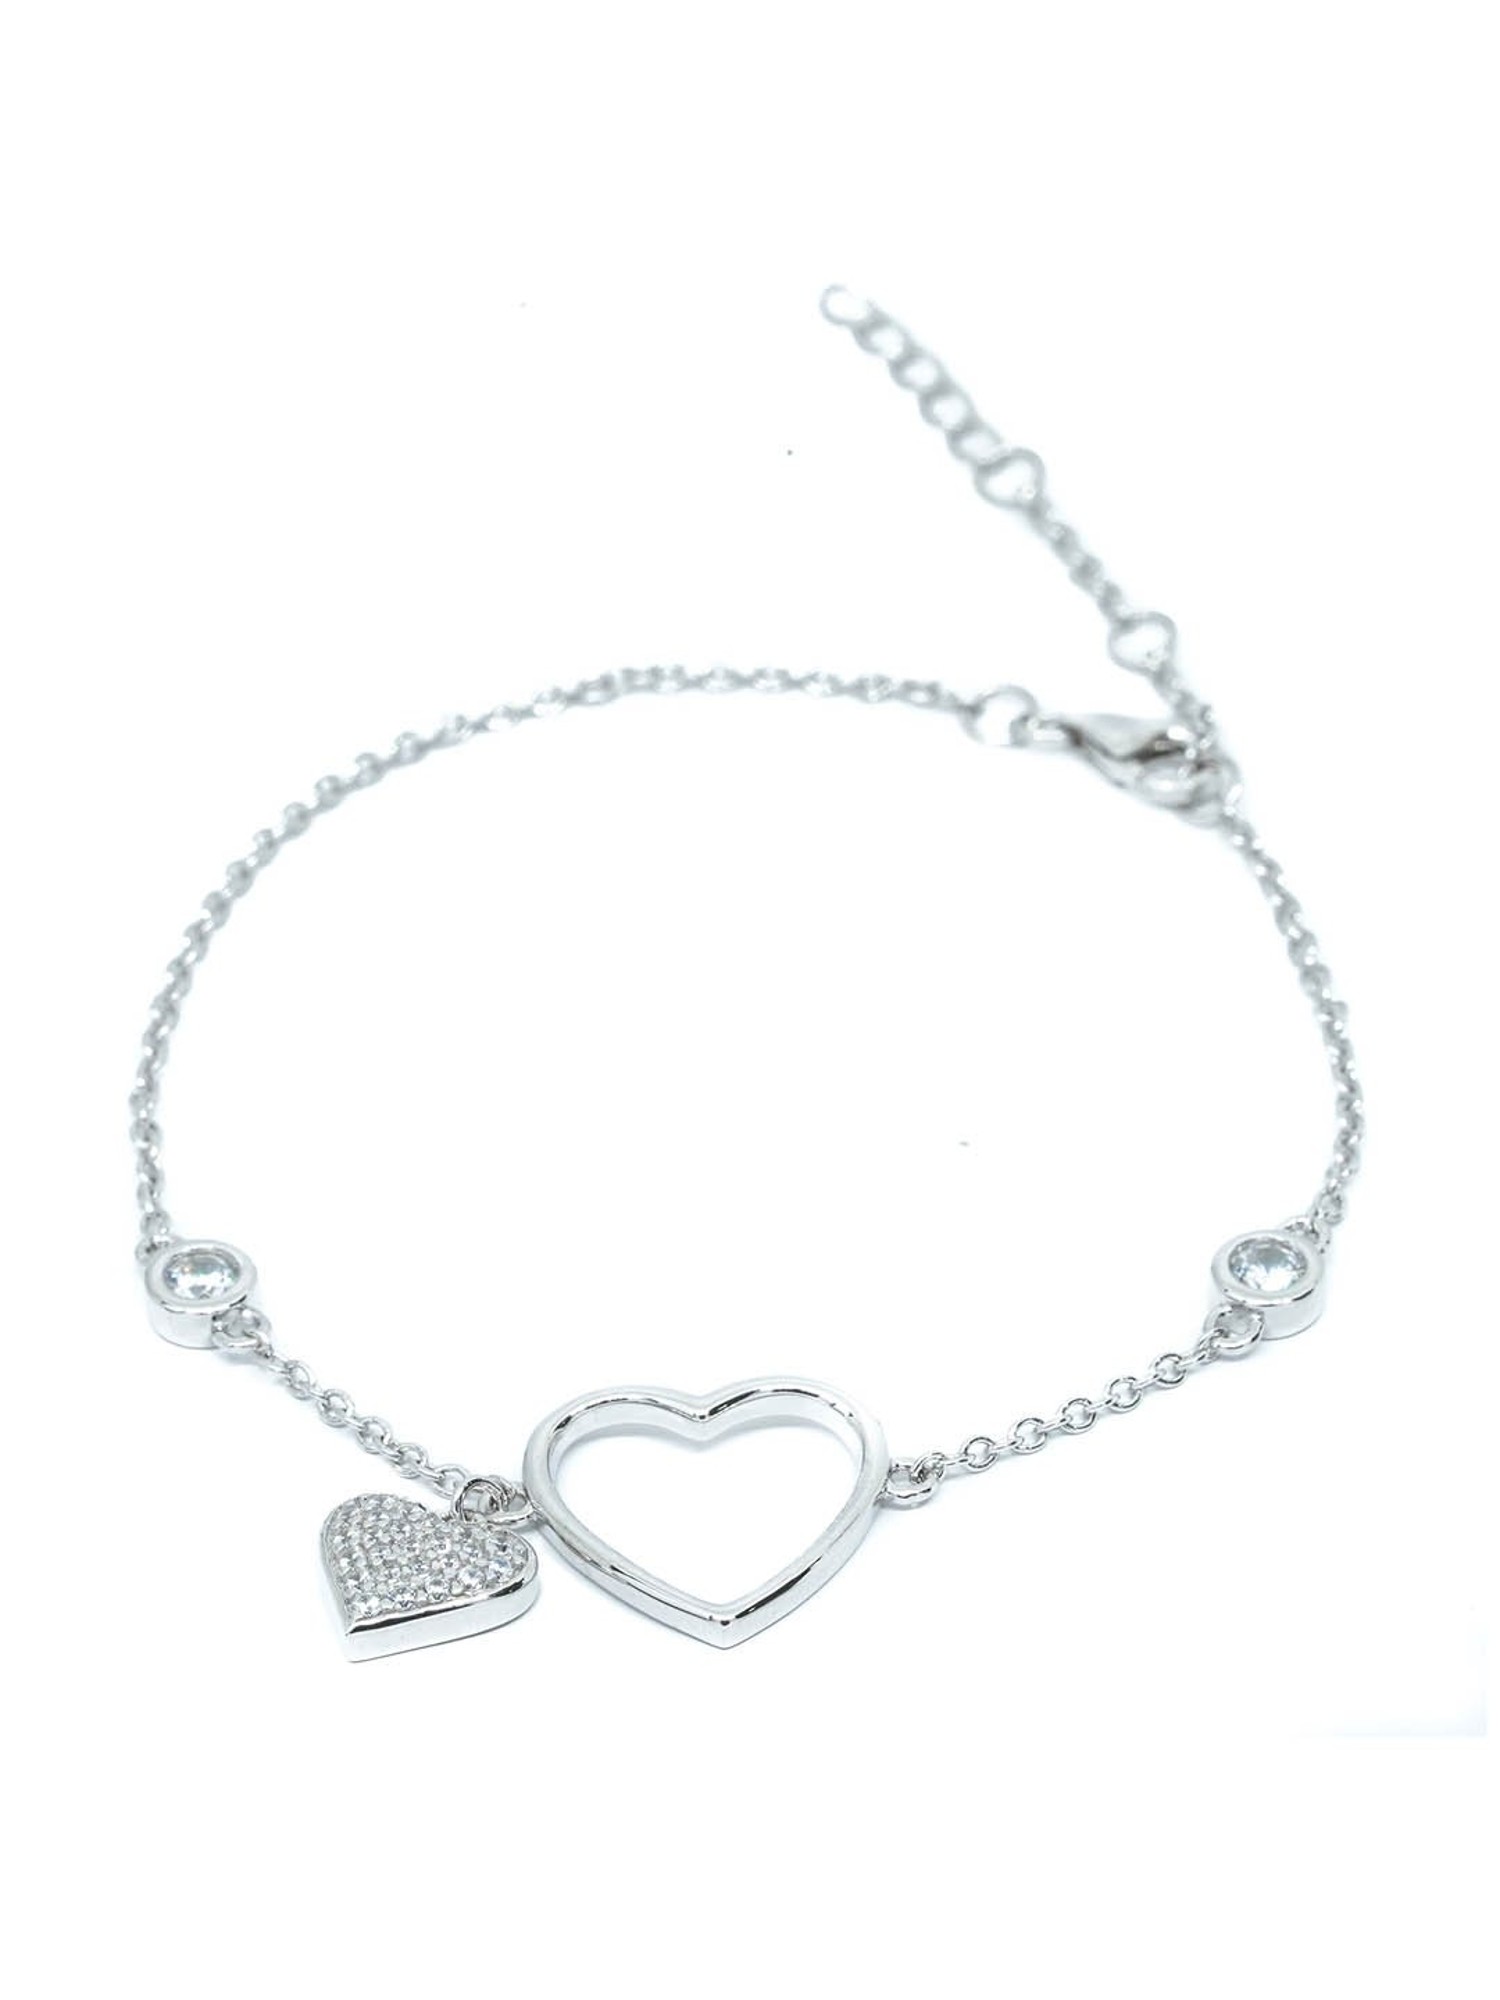 Hearts of LAGOS Heart of Philadelphia Charm Bracelet  Silver toggle  bracelet Charm bracelet Sterling silver heart